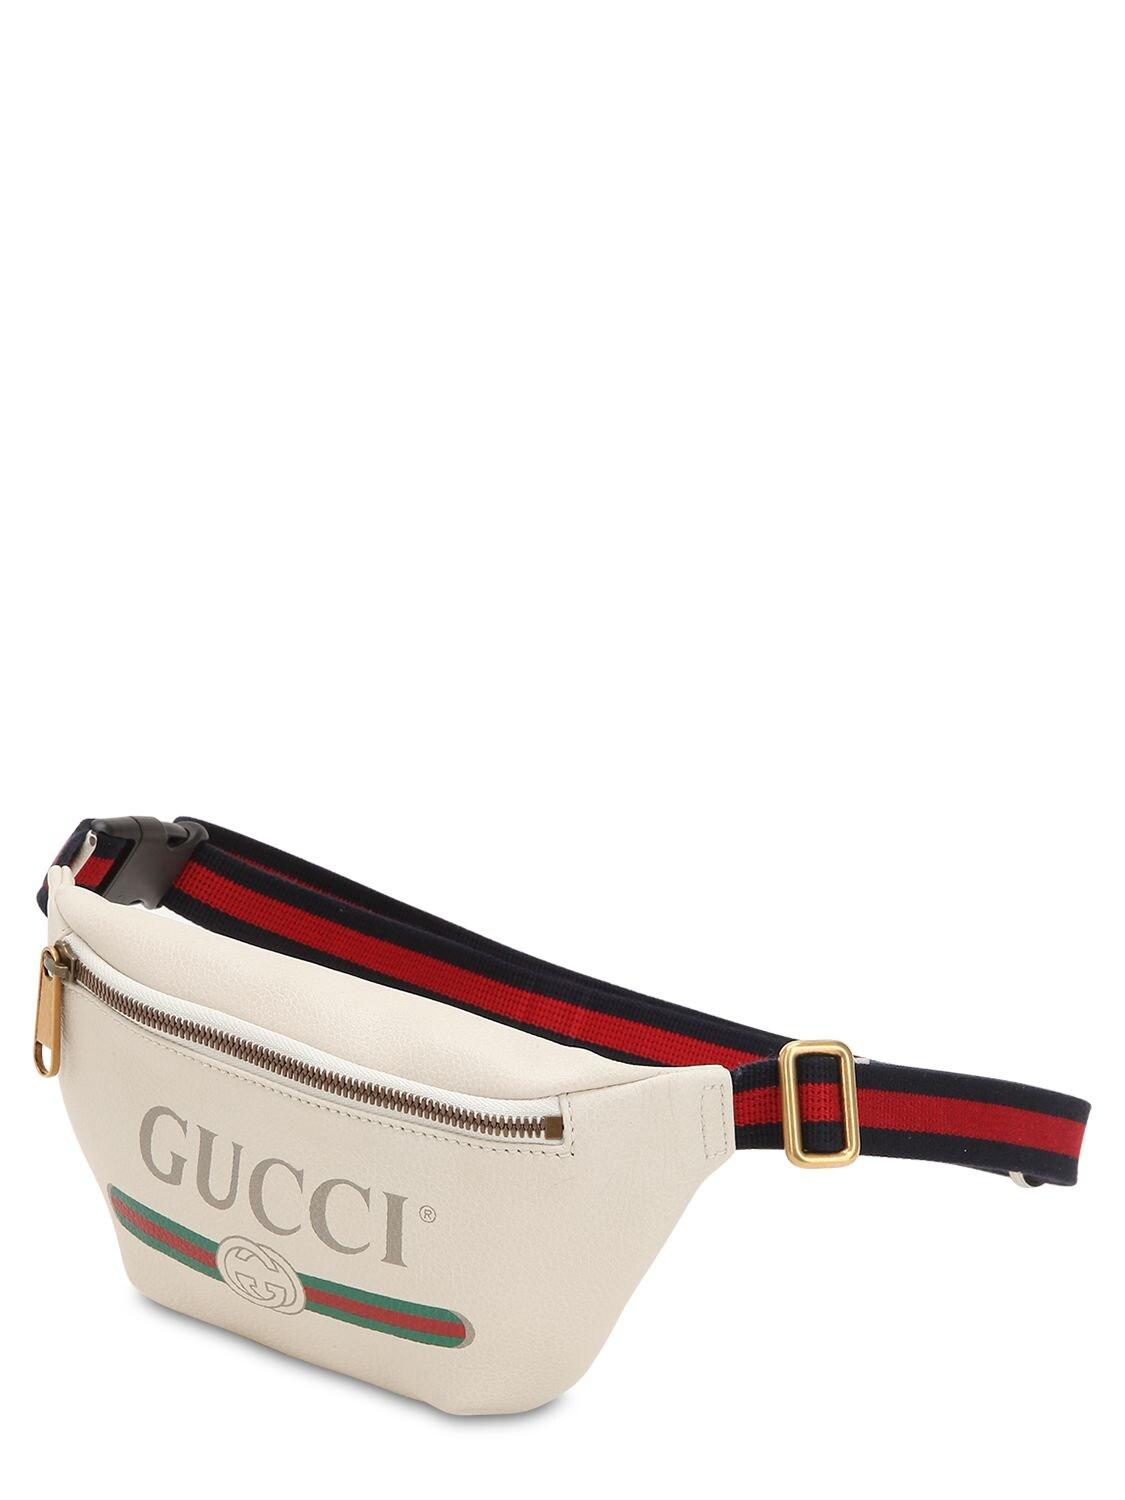 gucci white small logo belt bag